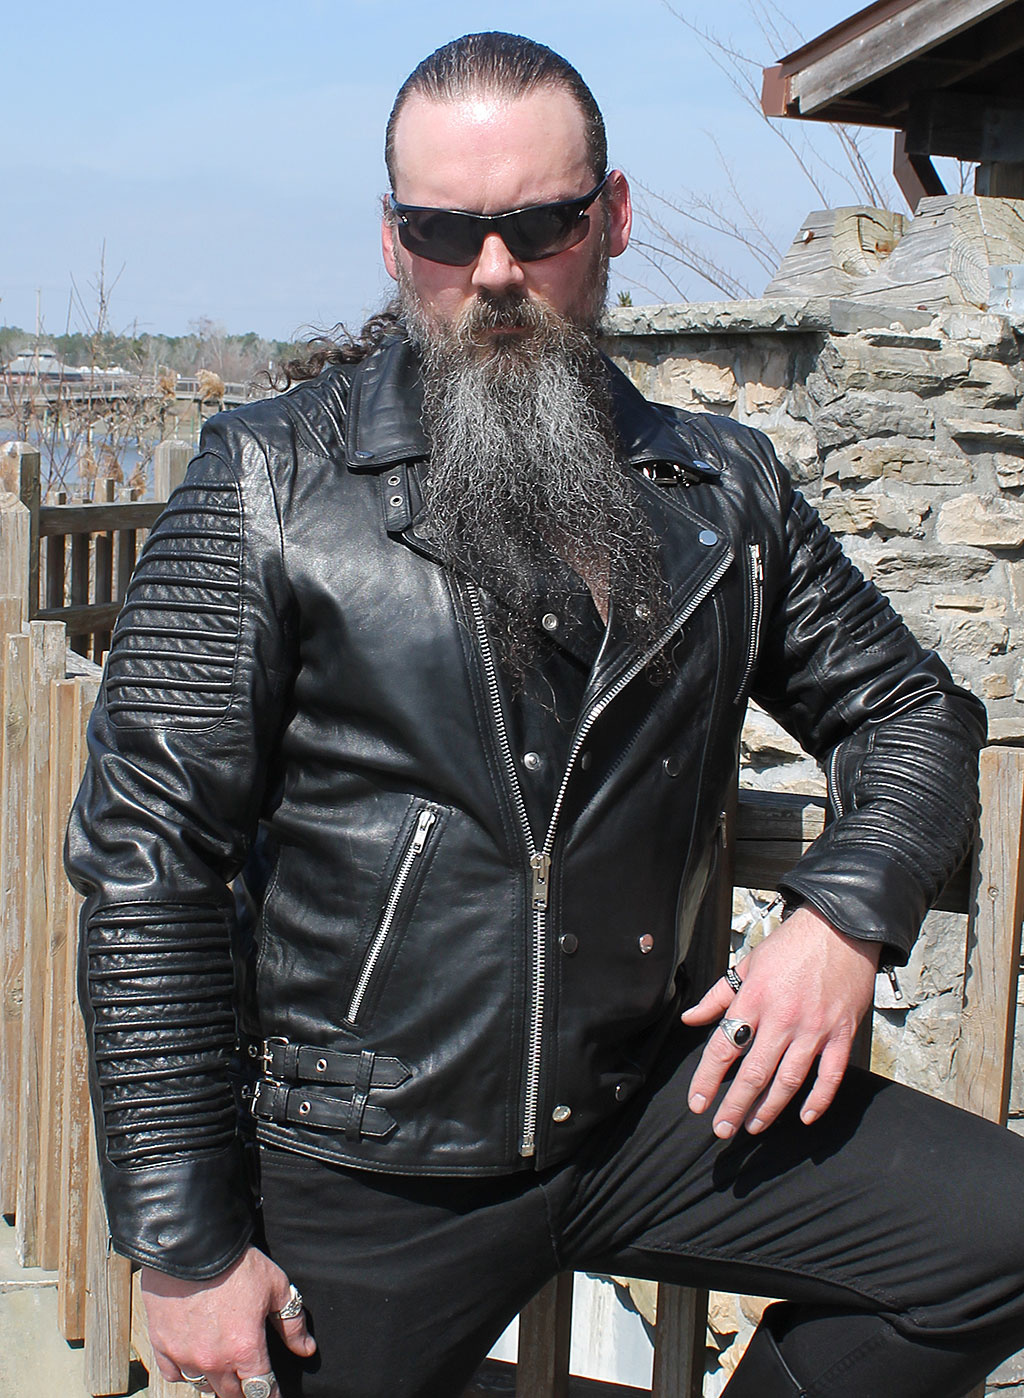 Top Quality Rivet Motorcycle Sheepskin Real Coats Men Short